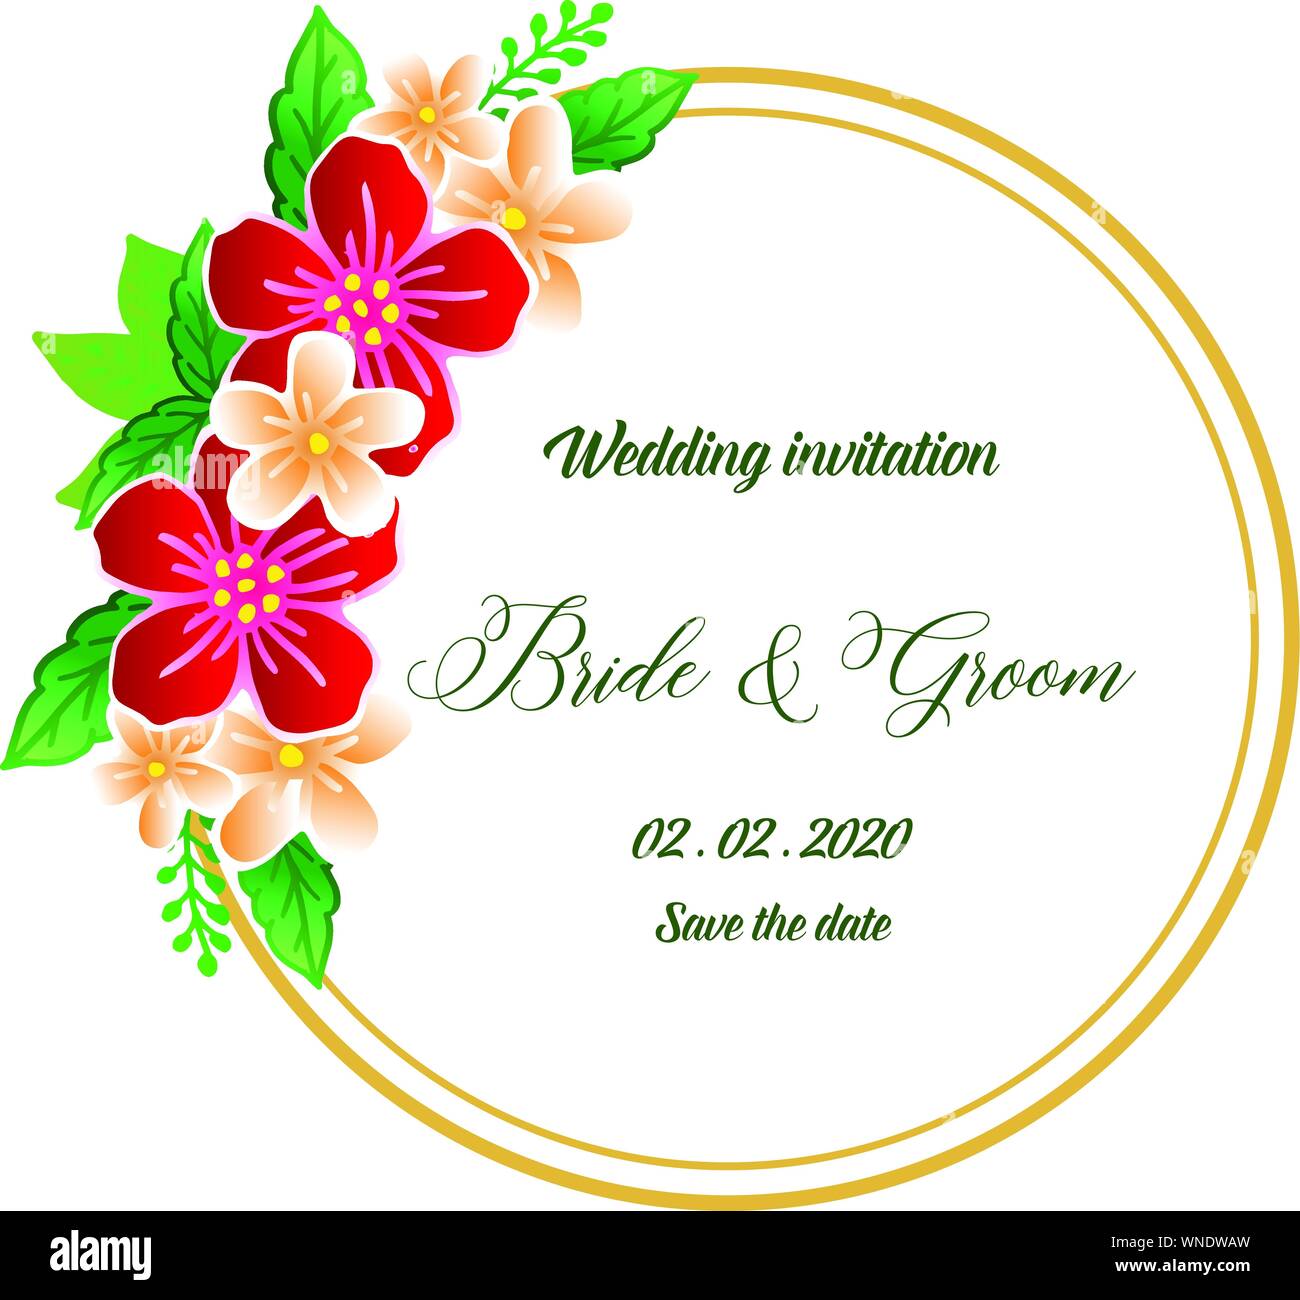 Wedding Invitation Card Template With Cute Groom And Bride Cartoon